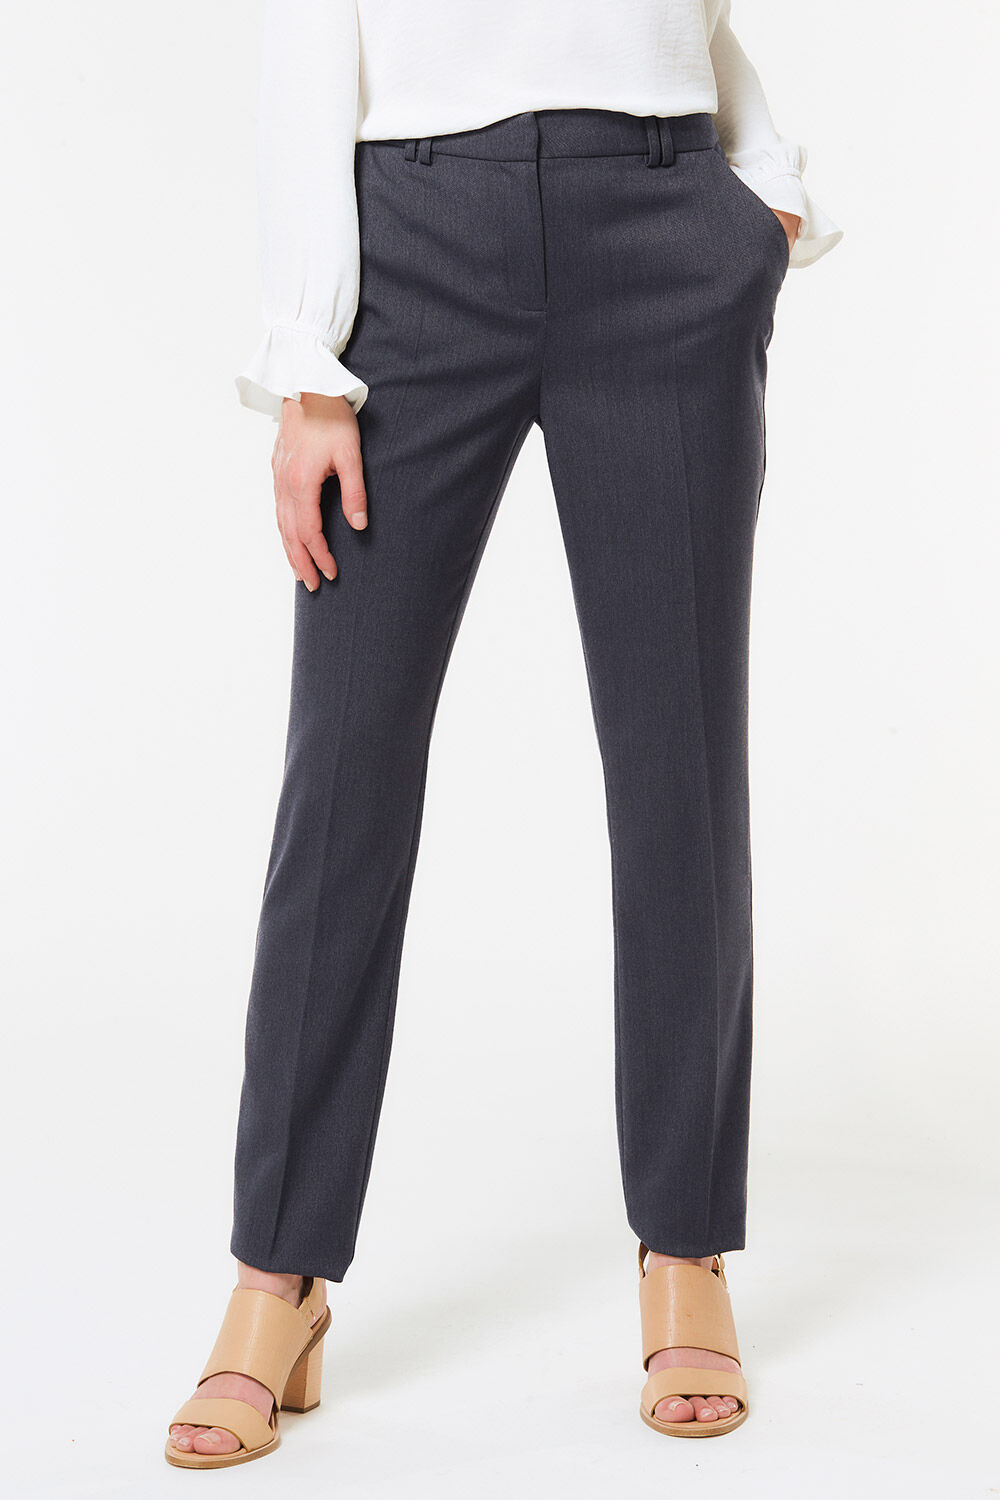 Bonmarché Womens Blue Polyester Trousers Size 14 L27 in Slim  eBay